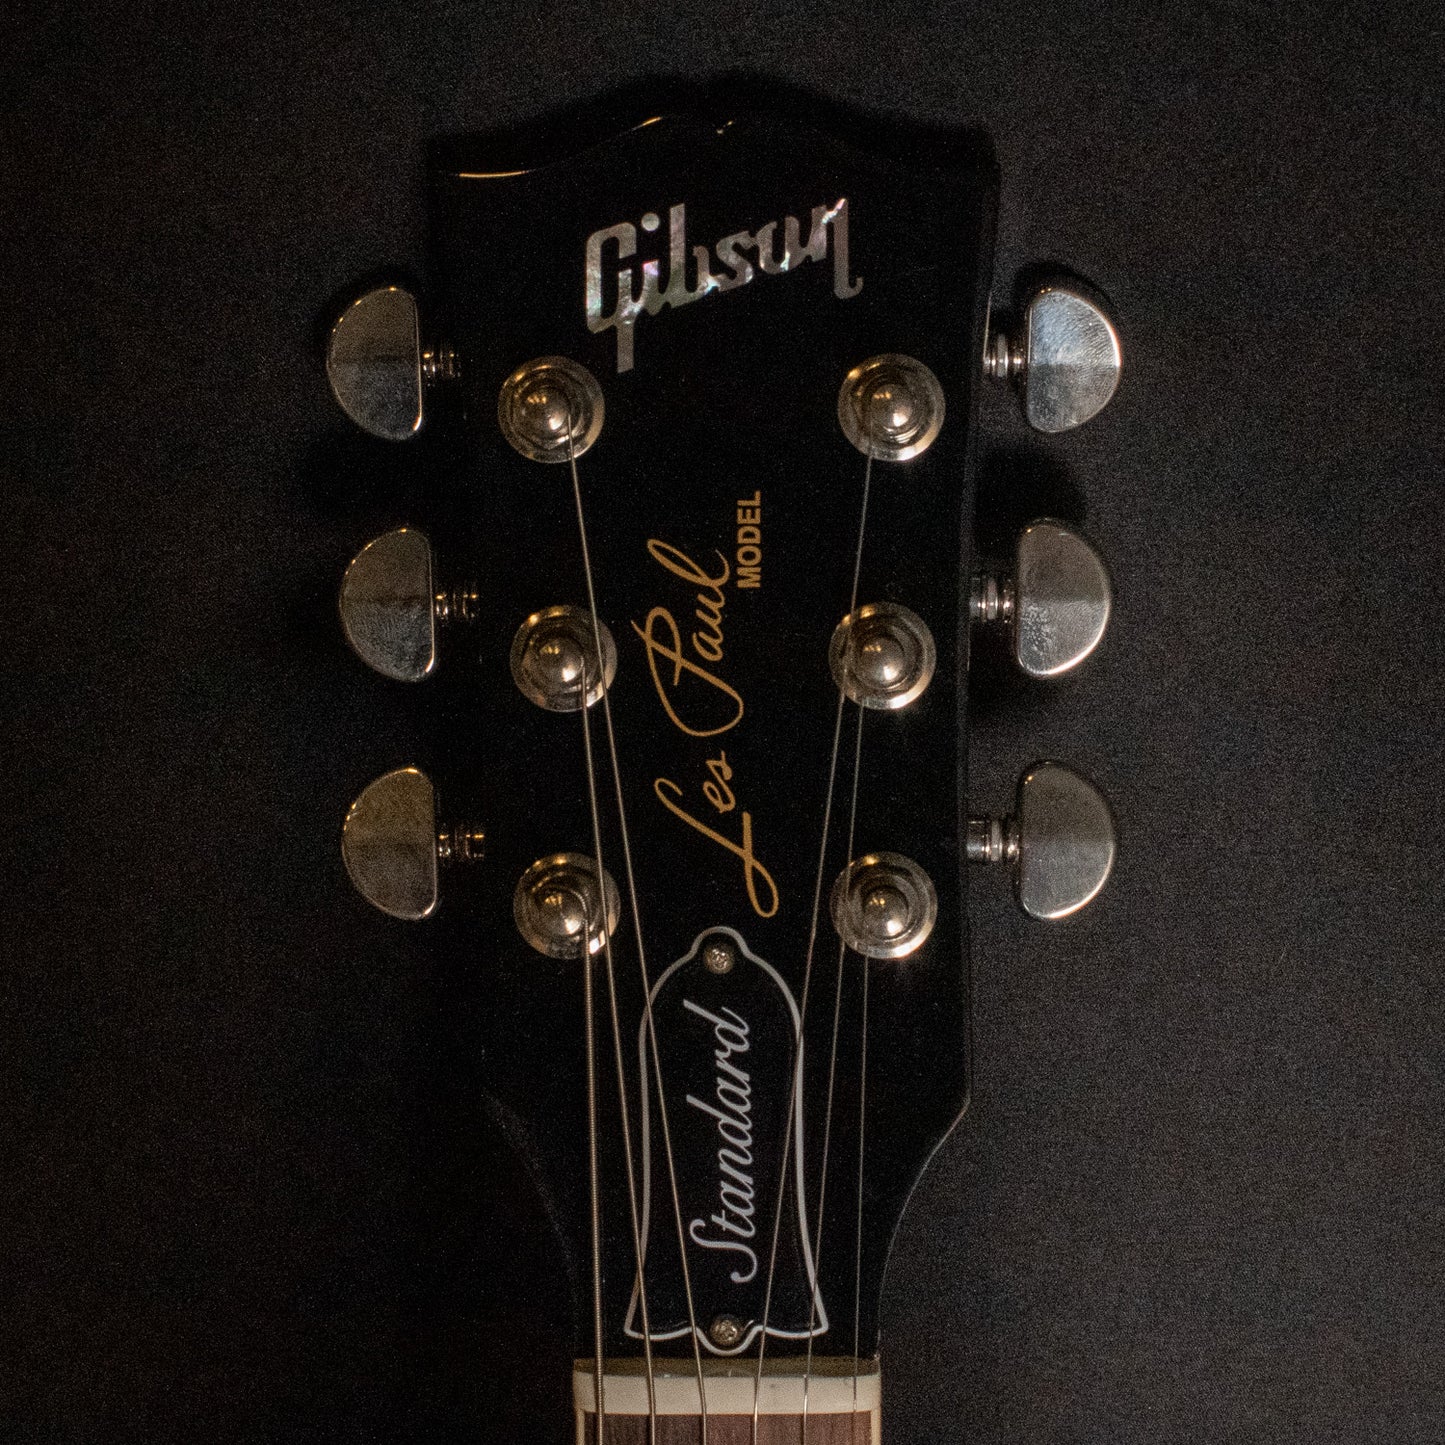 2019 Gibson Les Paul Standard '60s